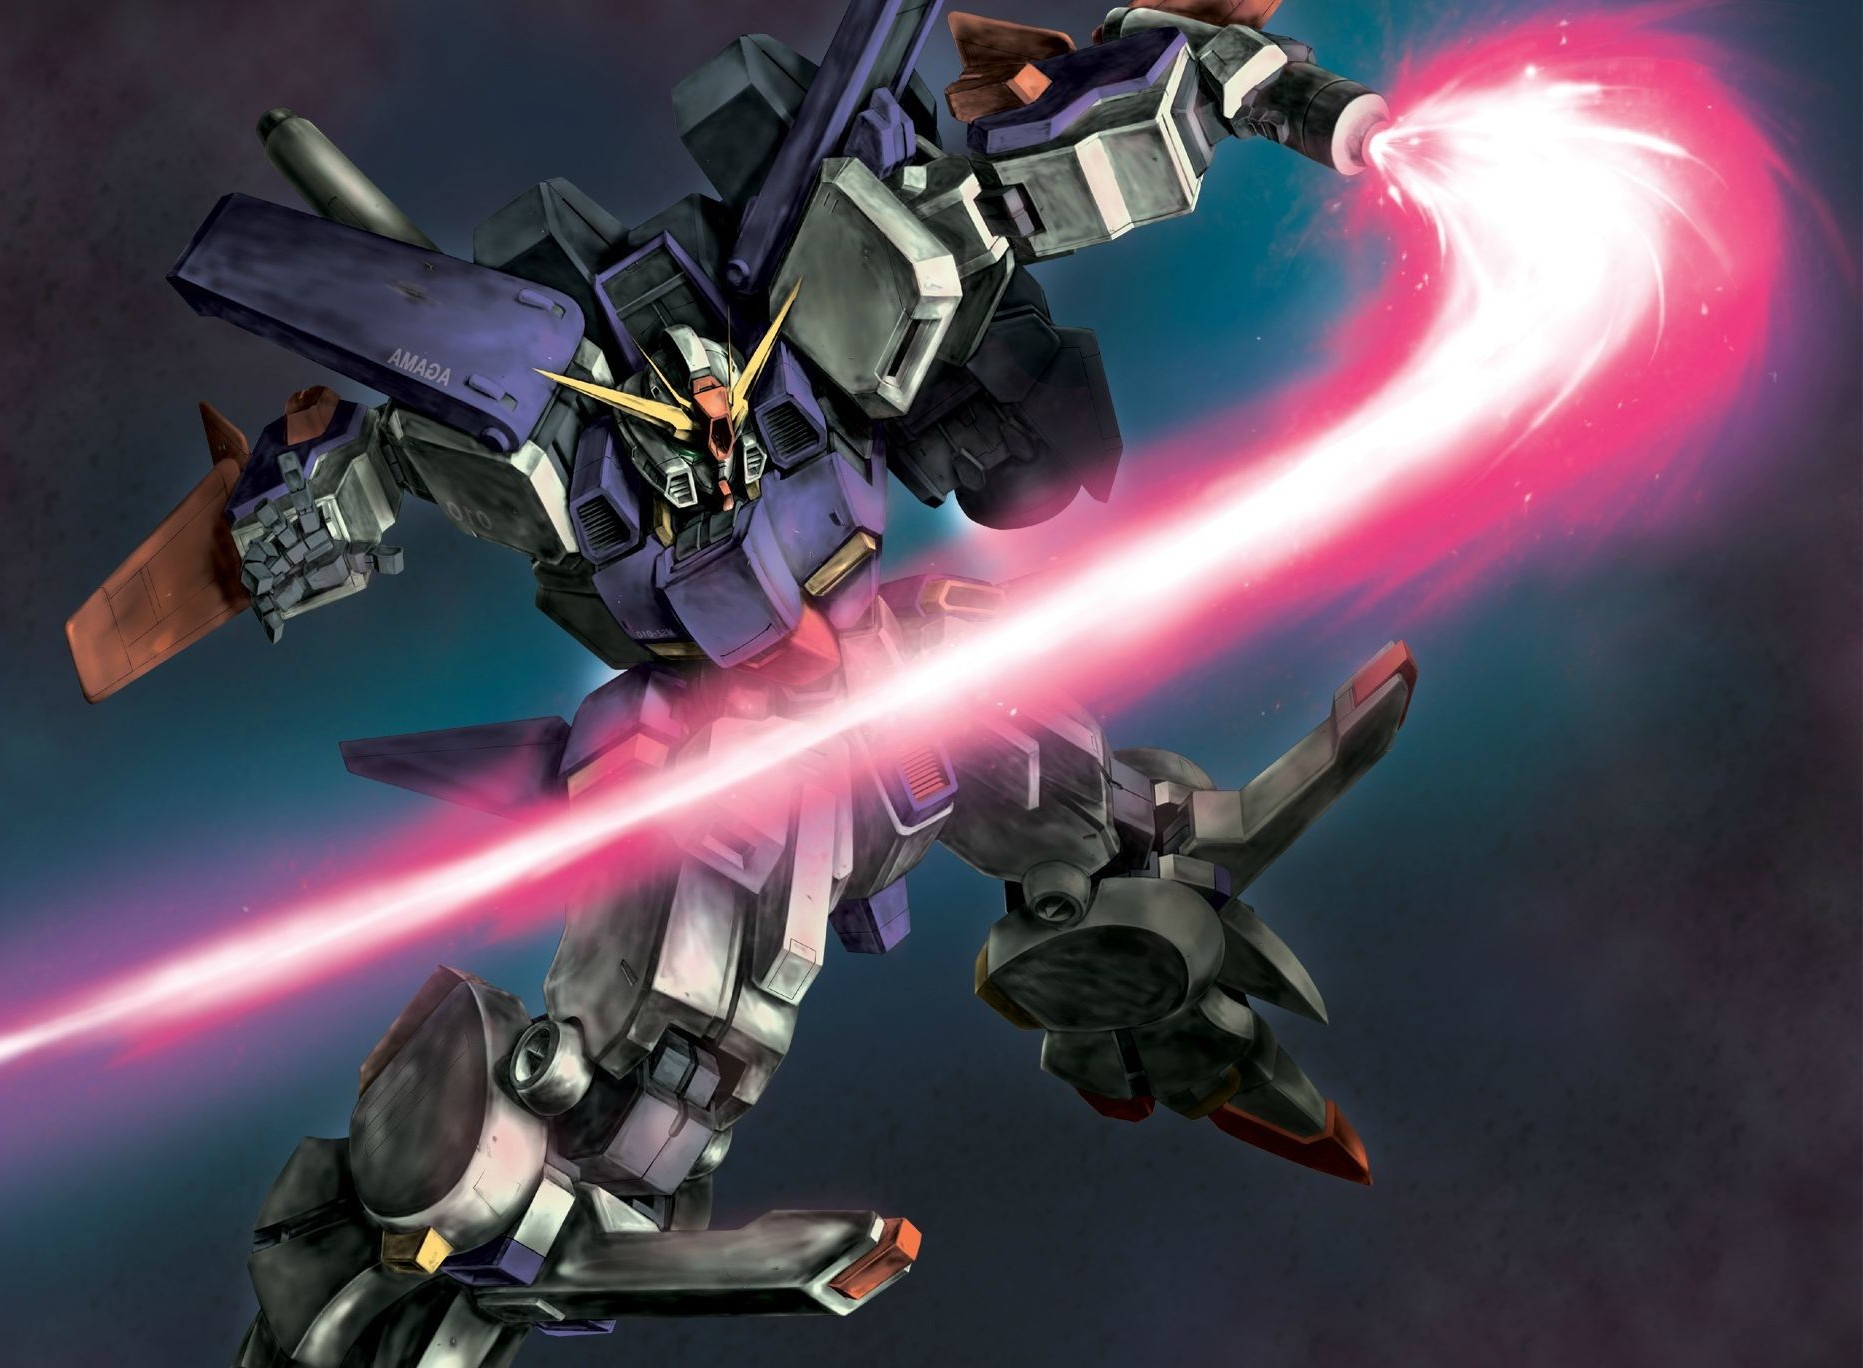 Gundam Mobile Suit Mobile Suit Gundam Zz Wallpapers Hd Desktop And Mobile Backgrounds